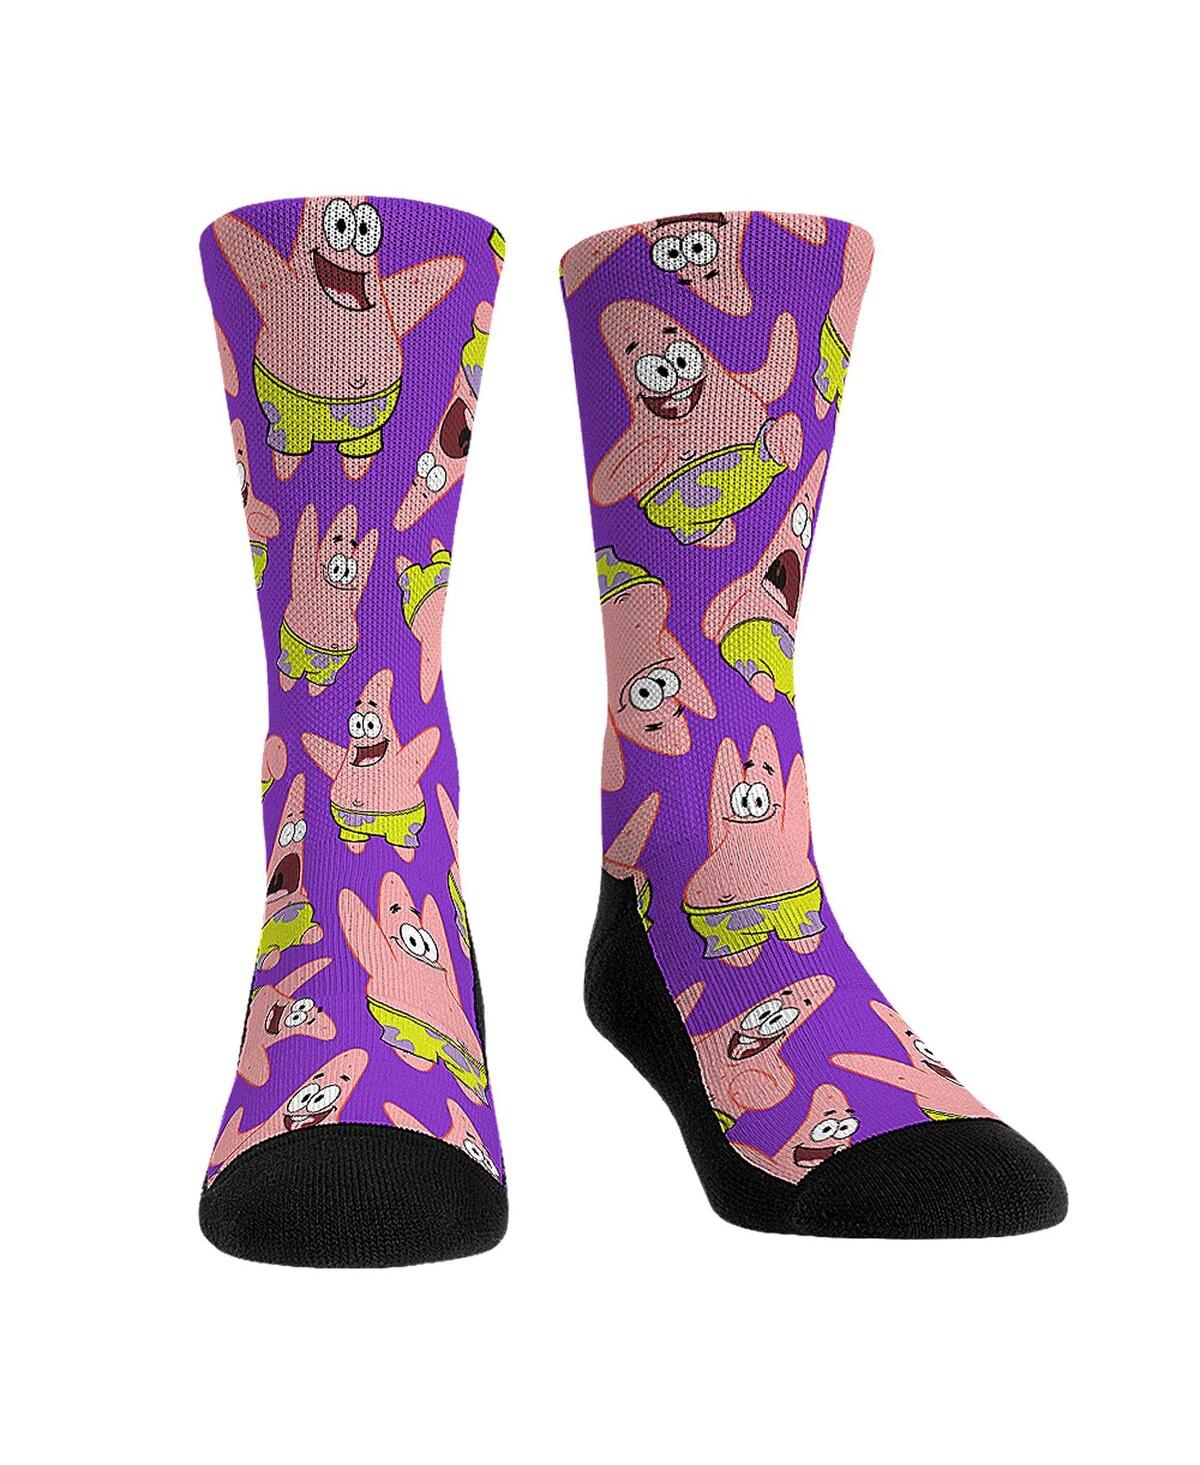 Men's and Women's Rock 'Em Socks SpongeBob Square Pants Patrick All Over Print Crew Socks - Multi